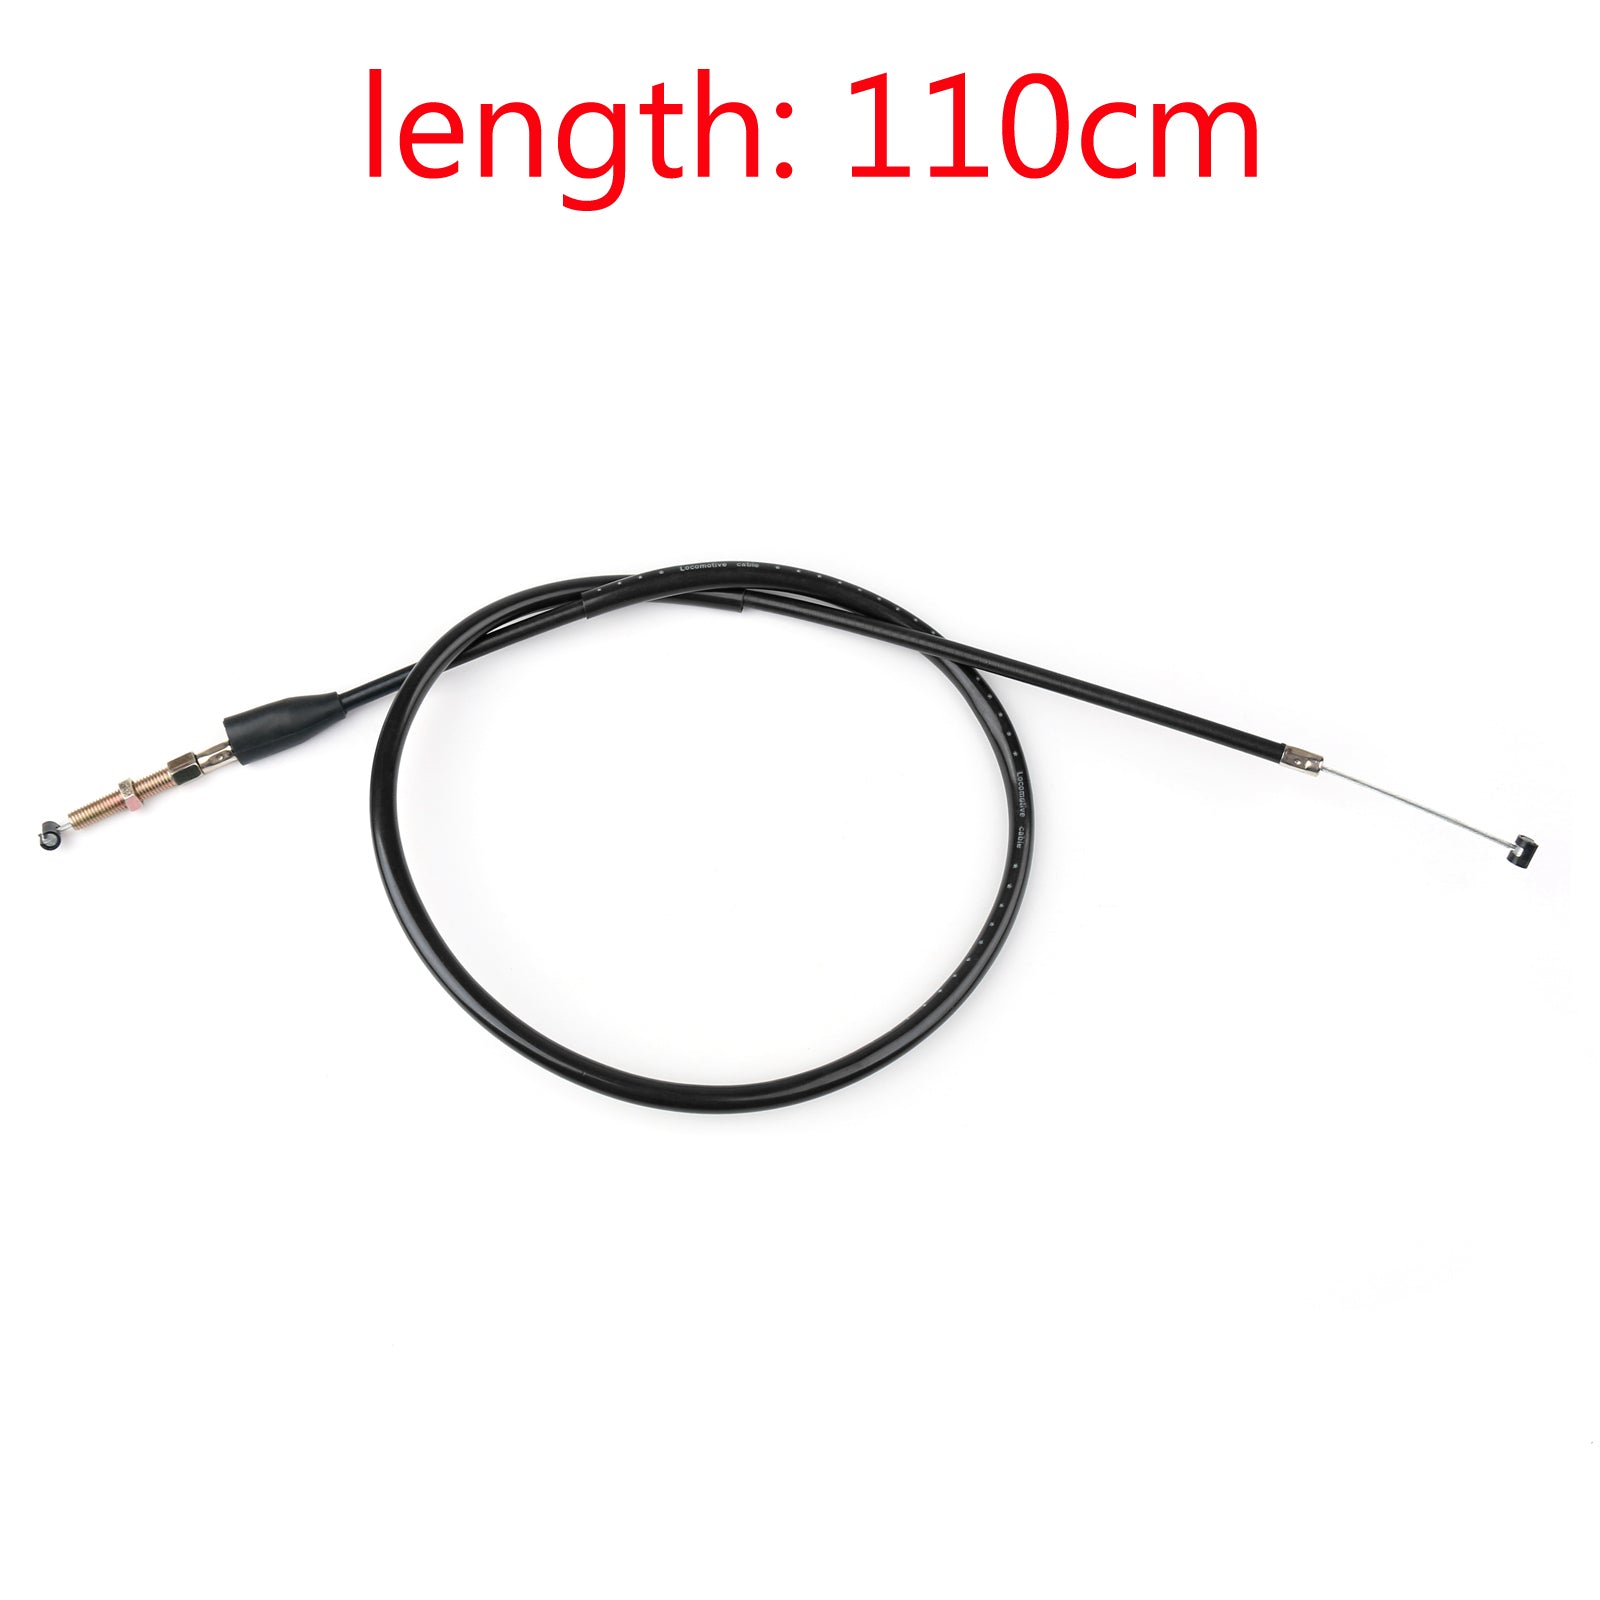 Cable de embrague de alambre de acero 2C0-26335-00-00 para Yamaha YZF R6 2006-2016 2008 2012 genérico